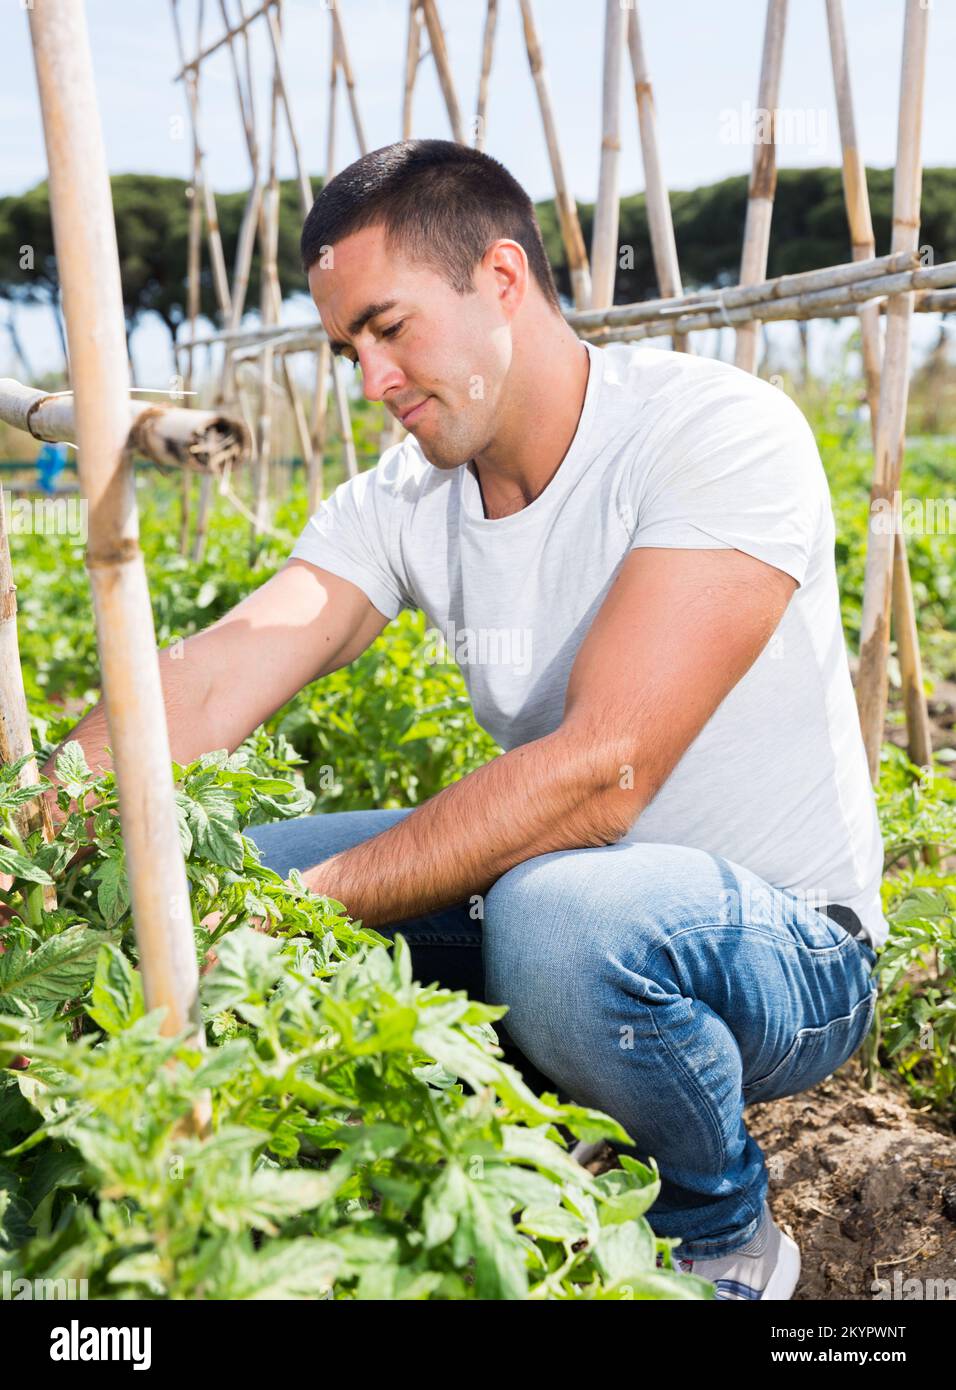 Man gardener working with tomatoes bushes in garden Stock Photo